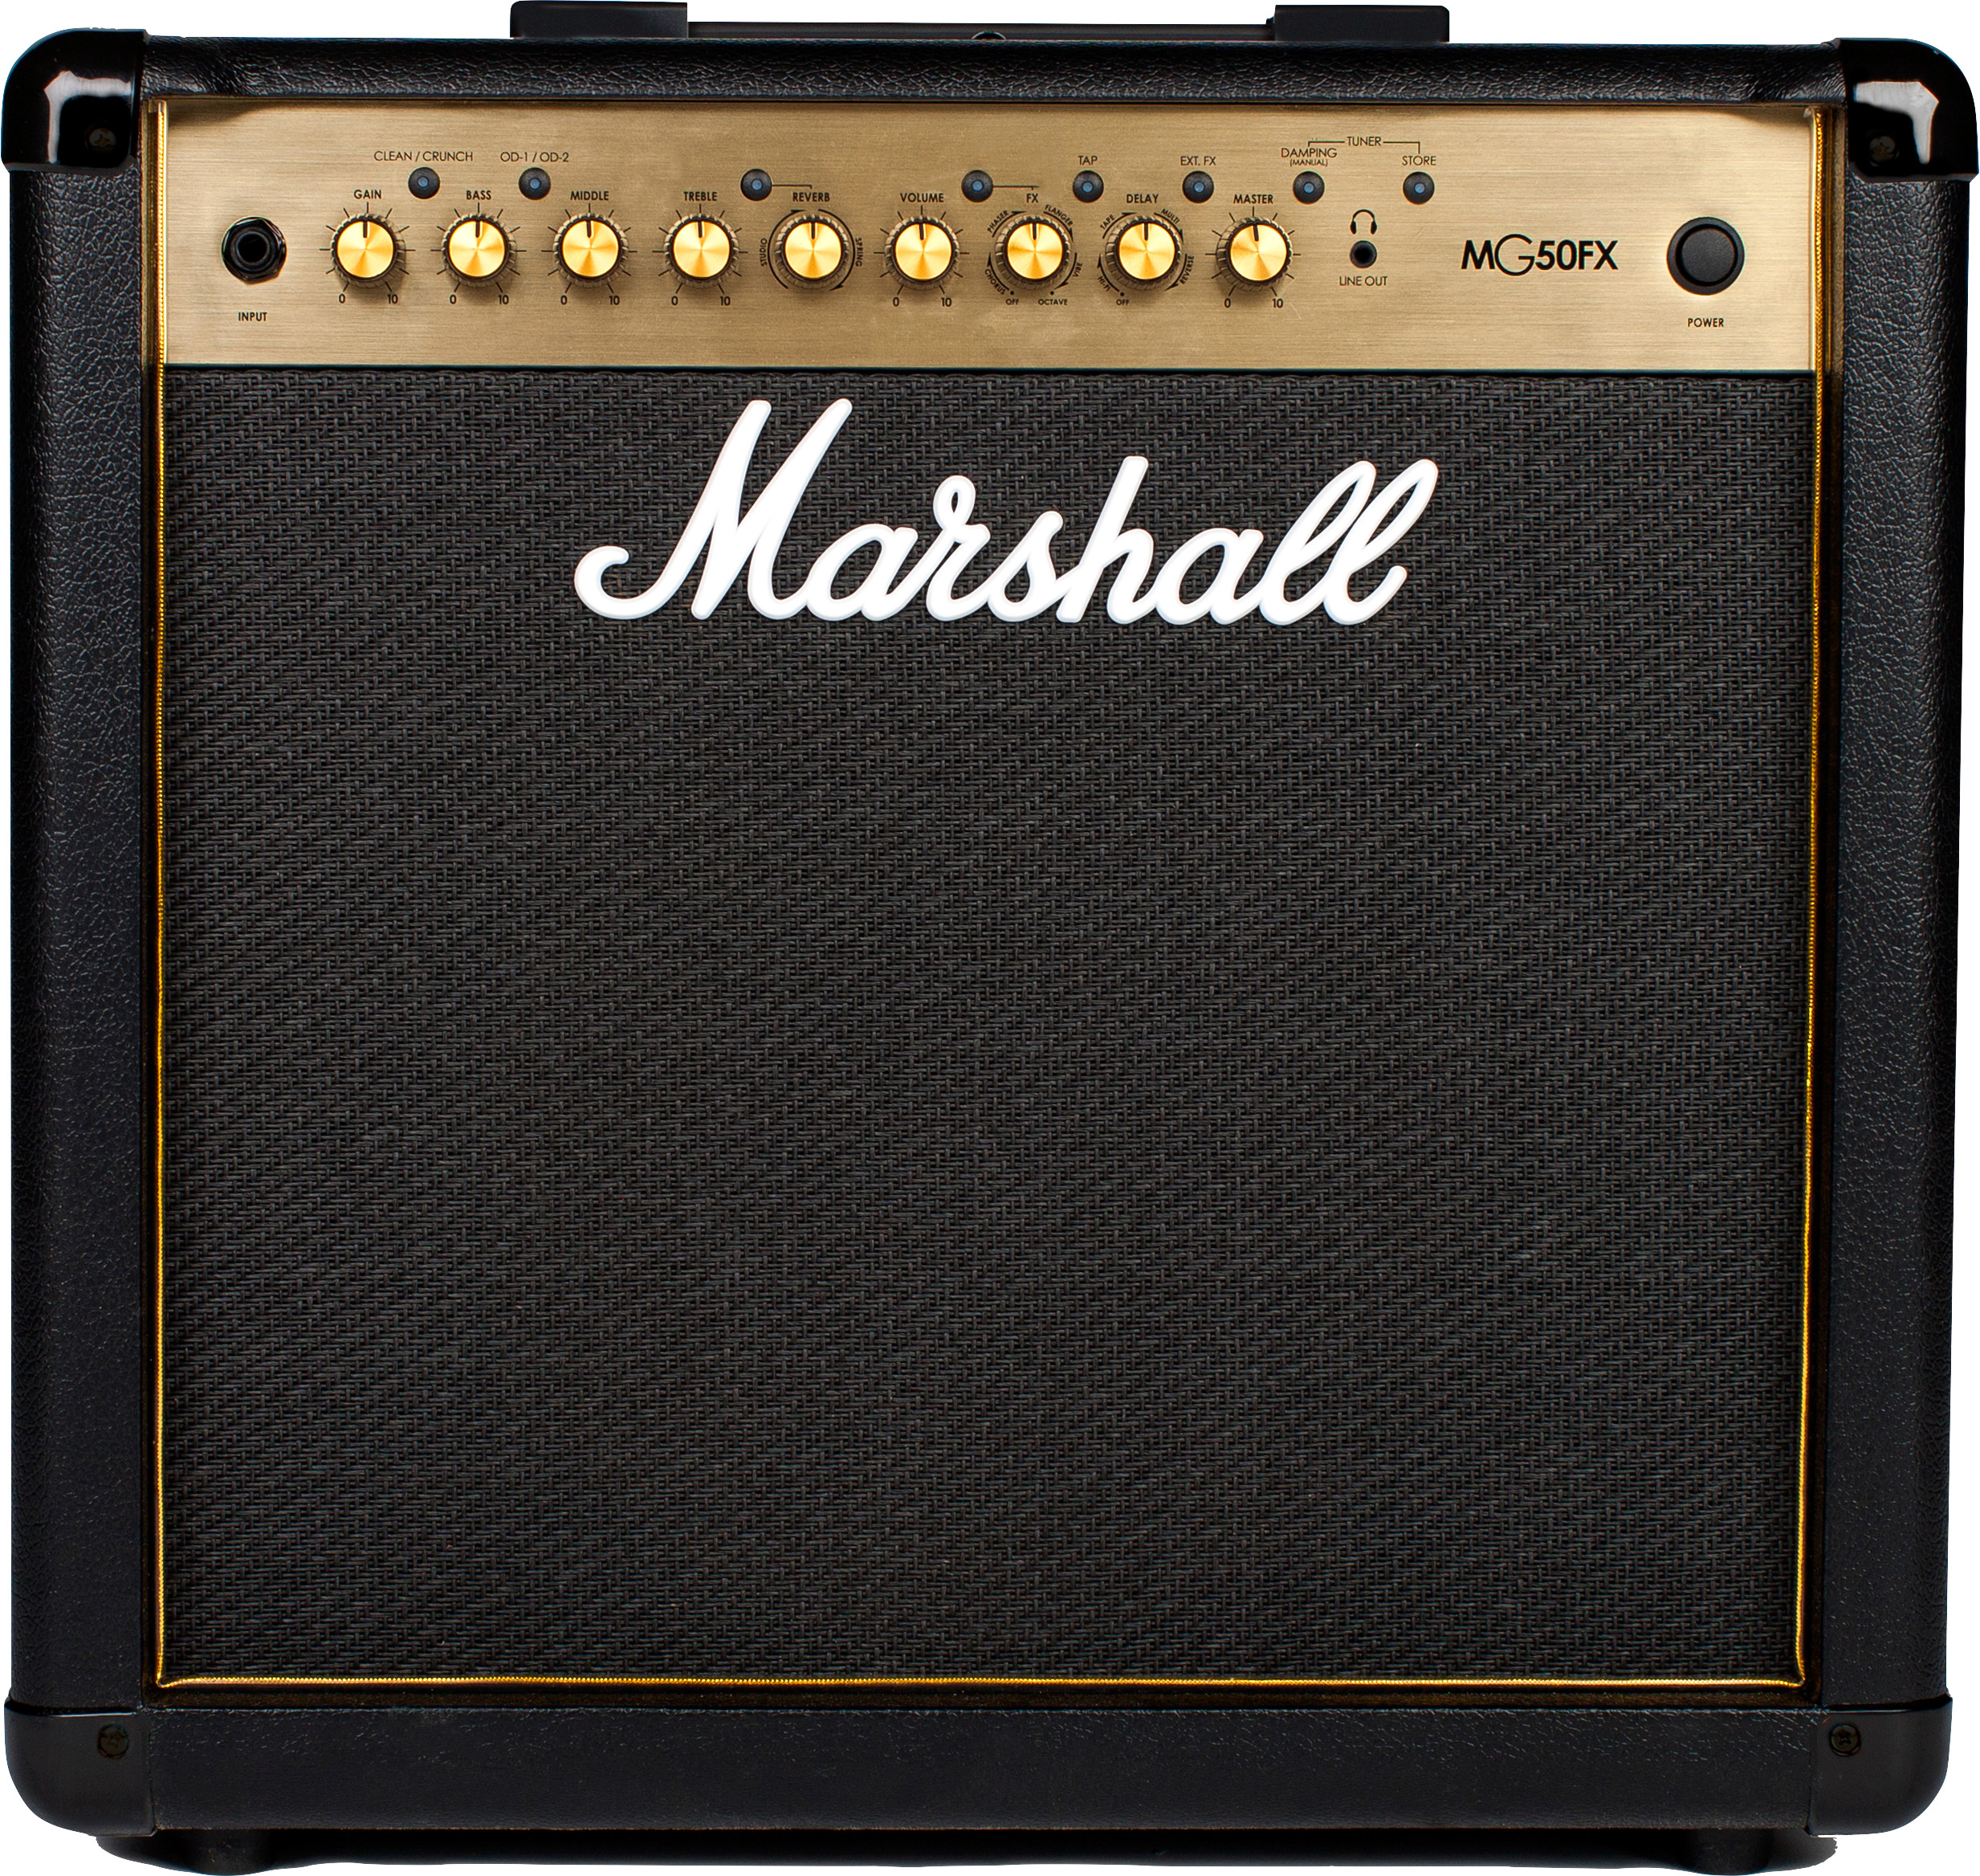 Marshall Mg50gfx Gold Combo 50 W - Combo amplificador para guitarra eléctrica - Variation 1